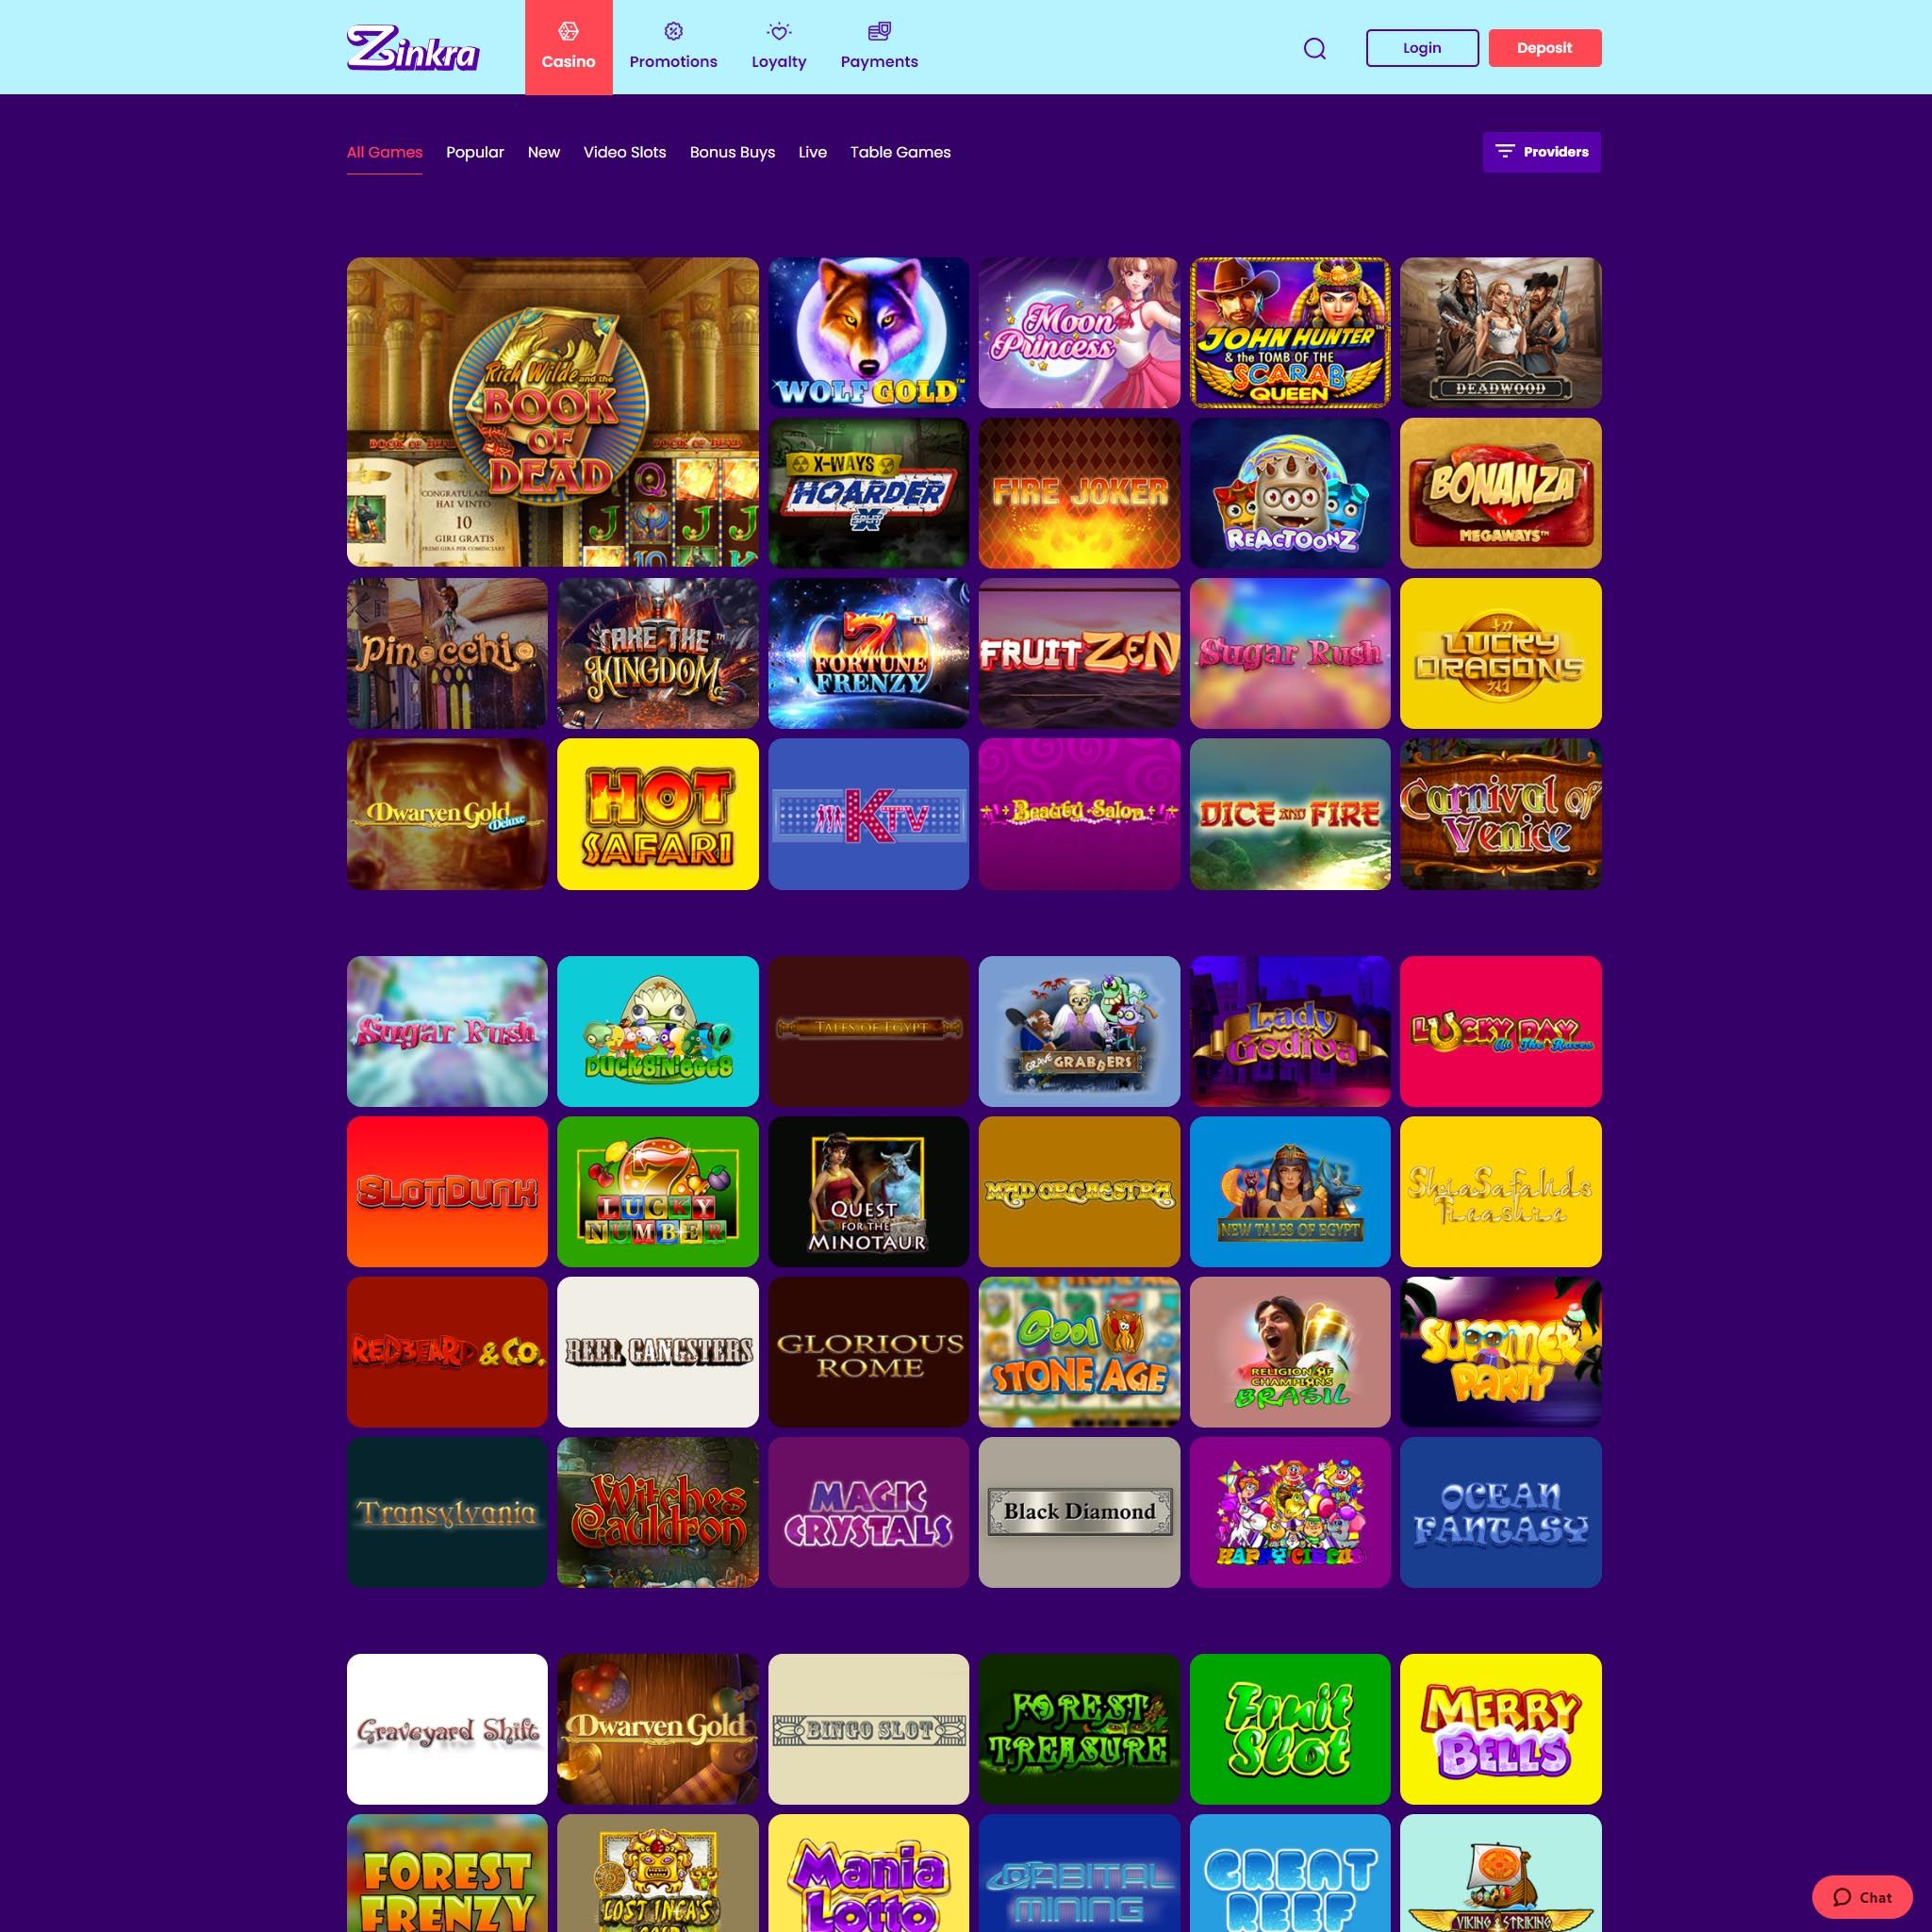 Zinkra Casino full games catalogue